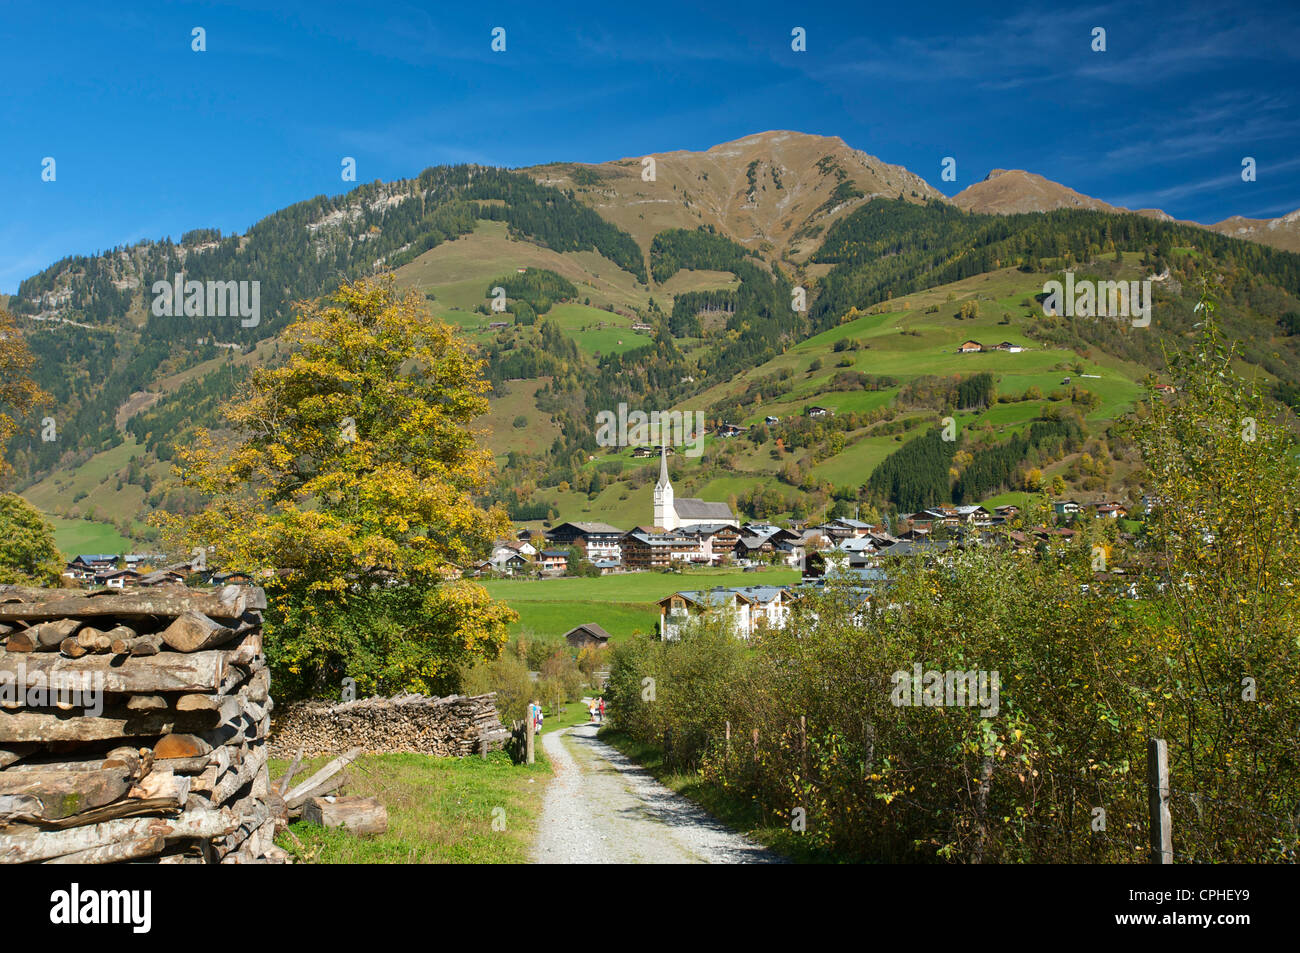 Salzburg country, Austria, Europe, outdoors, outside, day, autumn, autumnal, autumn colors, nobody, Pinzgau, scenery, nature, Al Stock Photo